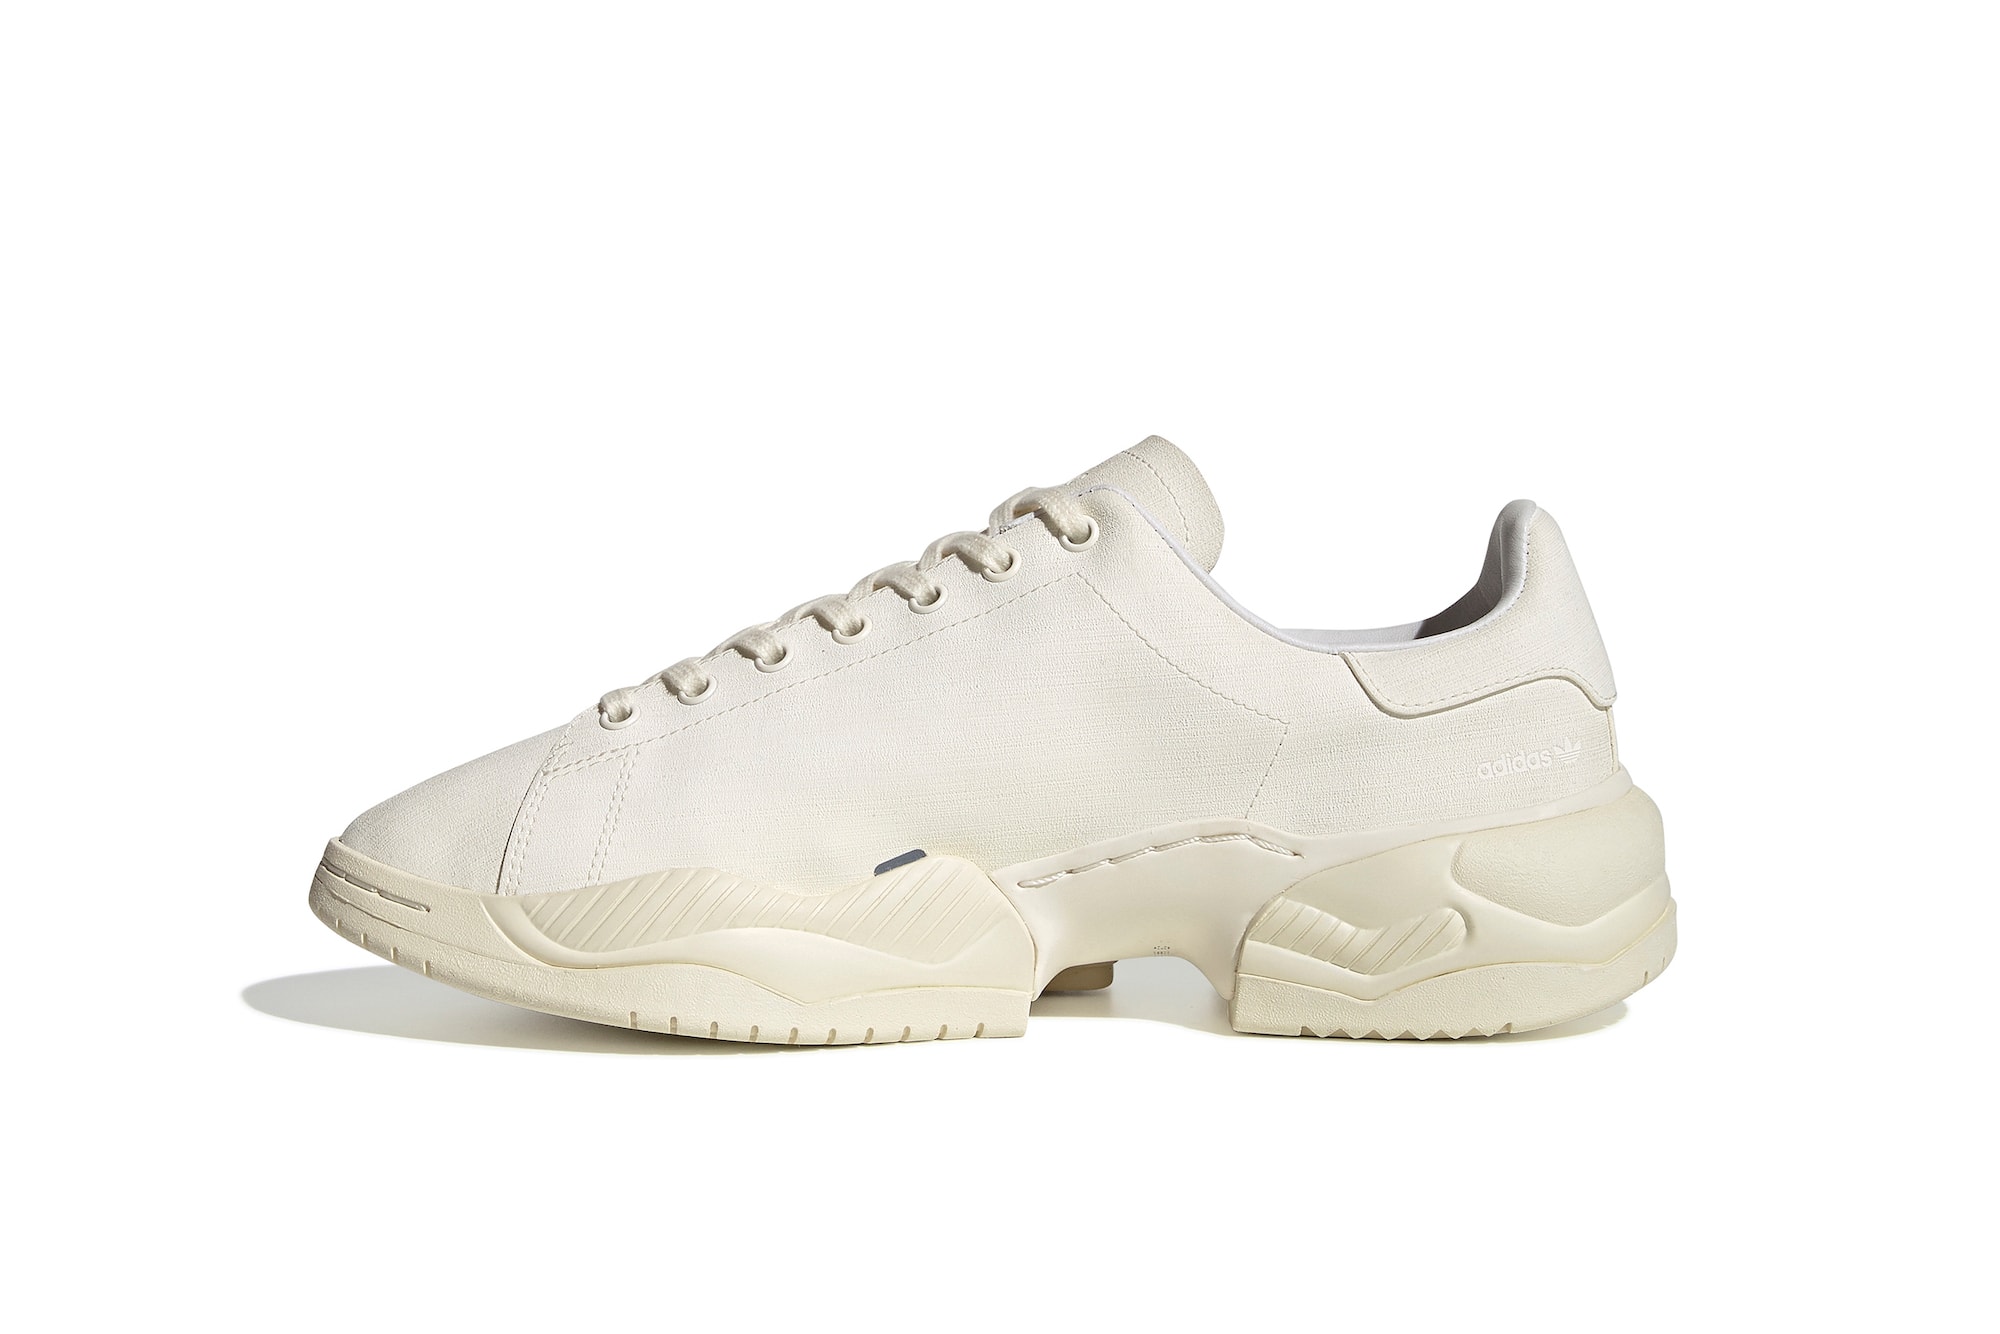 OAMC x adidas Originals Type O-2 Sneaker Release | Hypebae